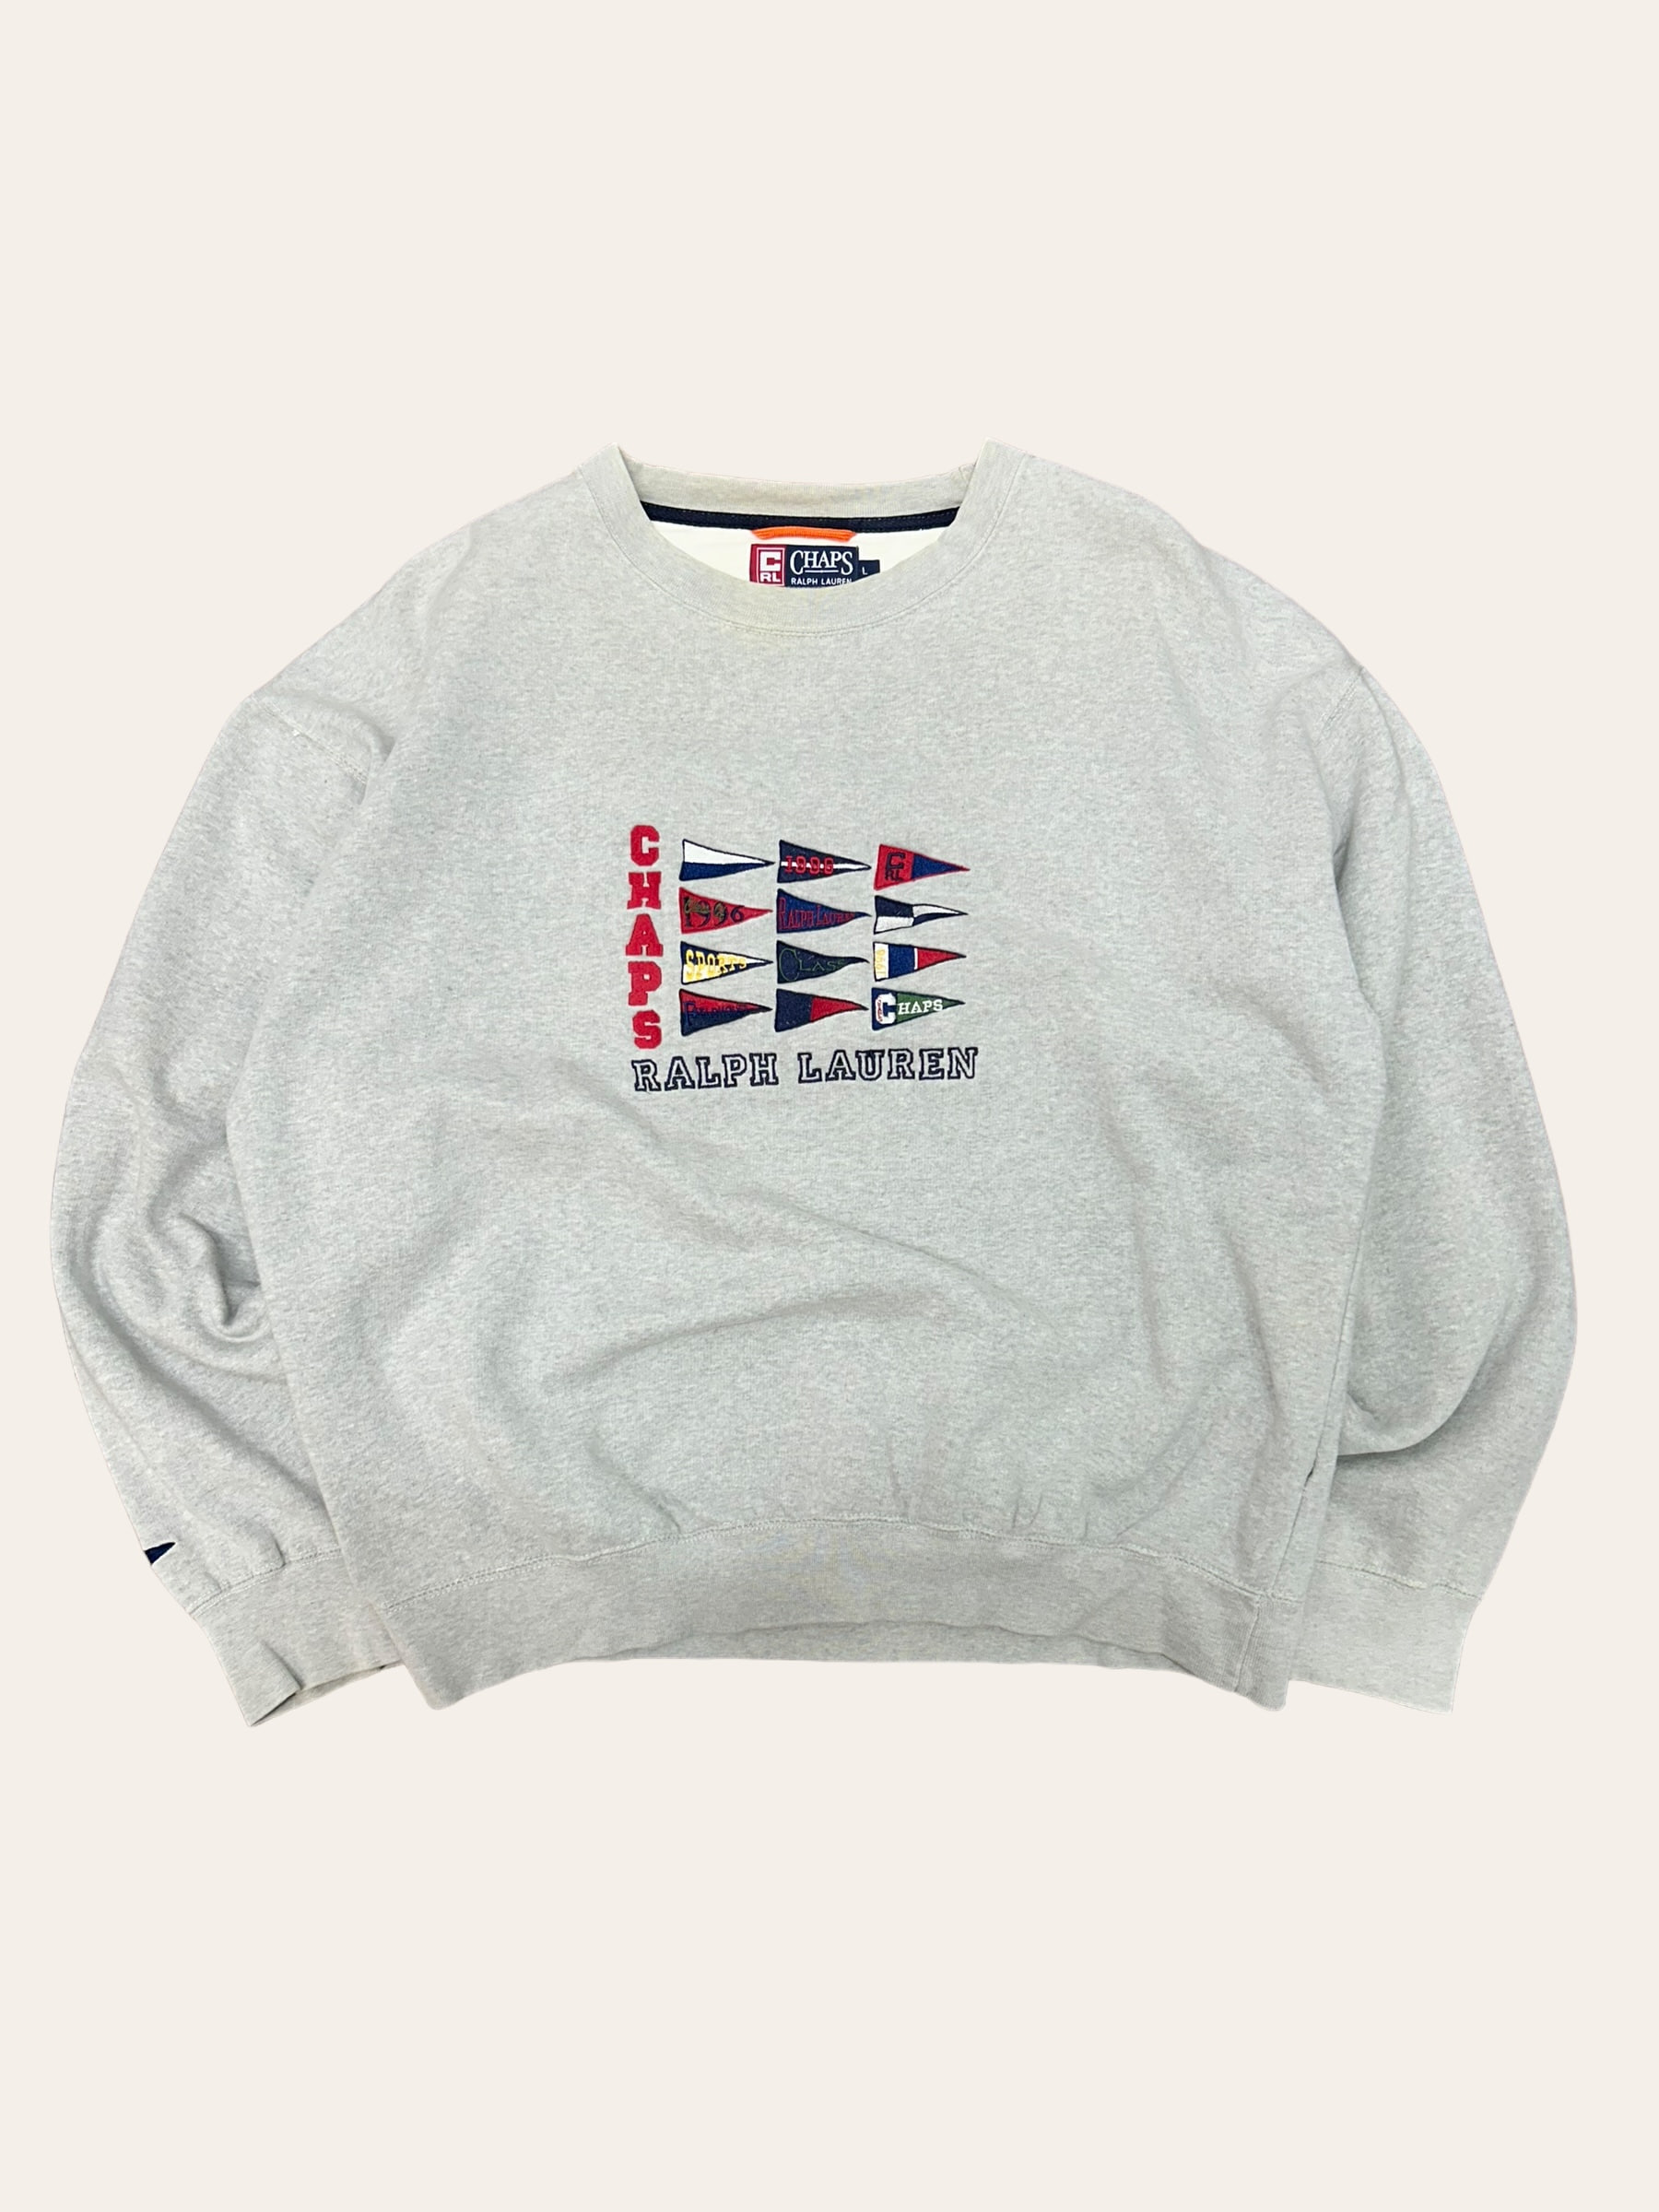 Chaps ralph lauren gray multicolor flags embroidered sweatshirt L